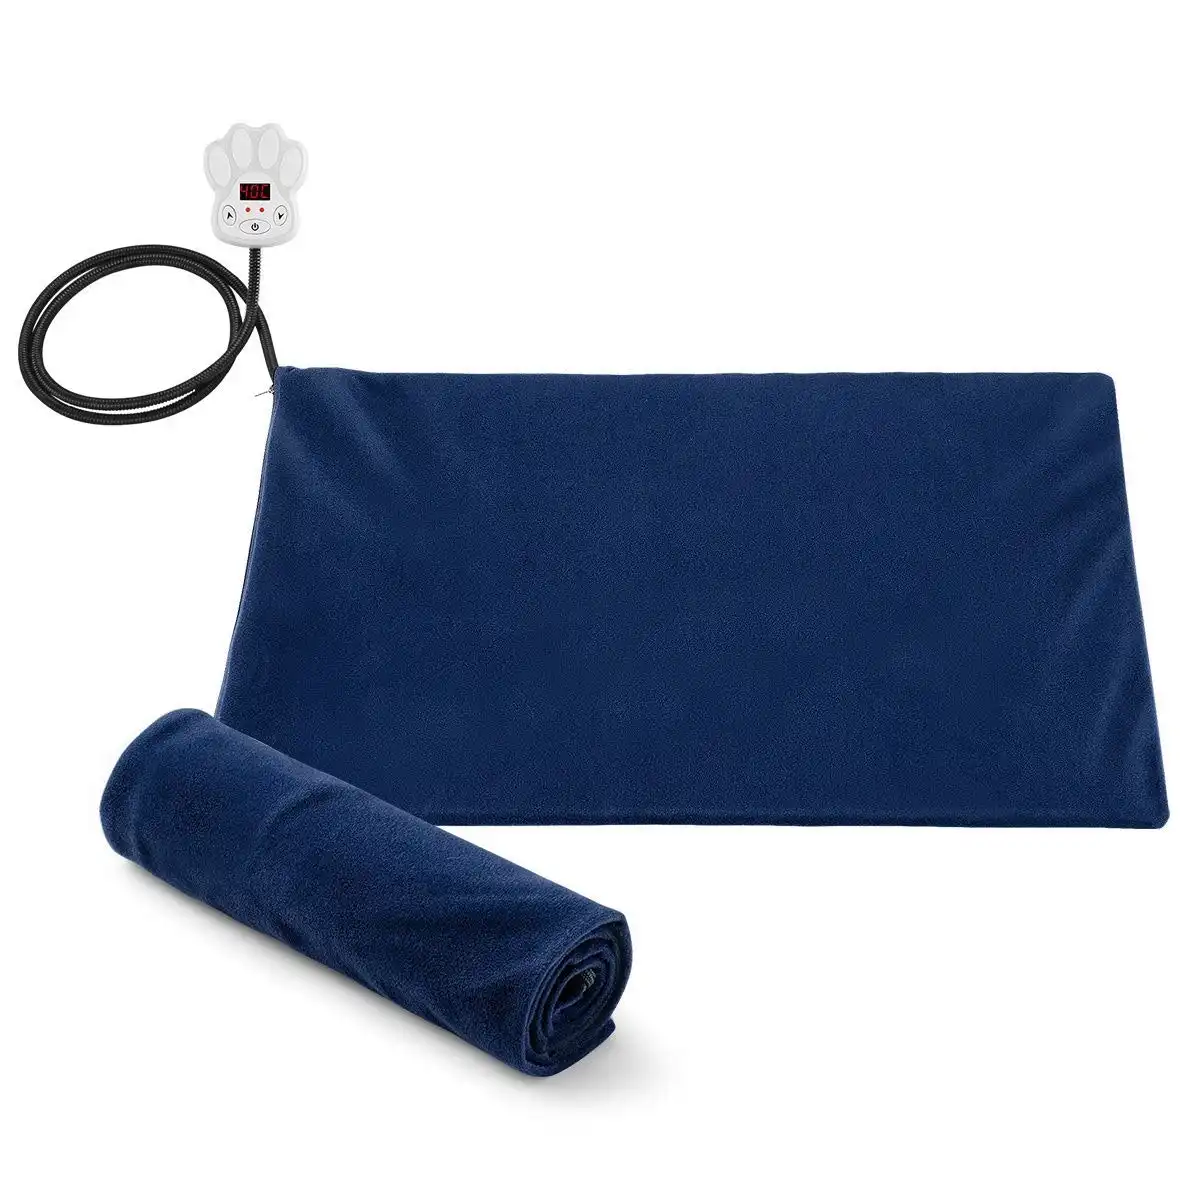 Pet Scene Pet Heated Mat Dog Heating Pad Cat Puppy Electric Heater Blanket Heat Bed Waterproof Cover 65x40cm Blue